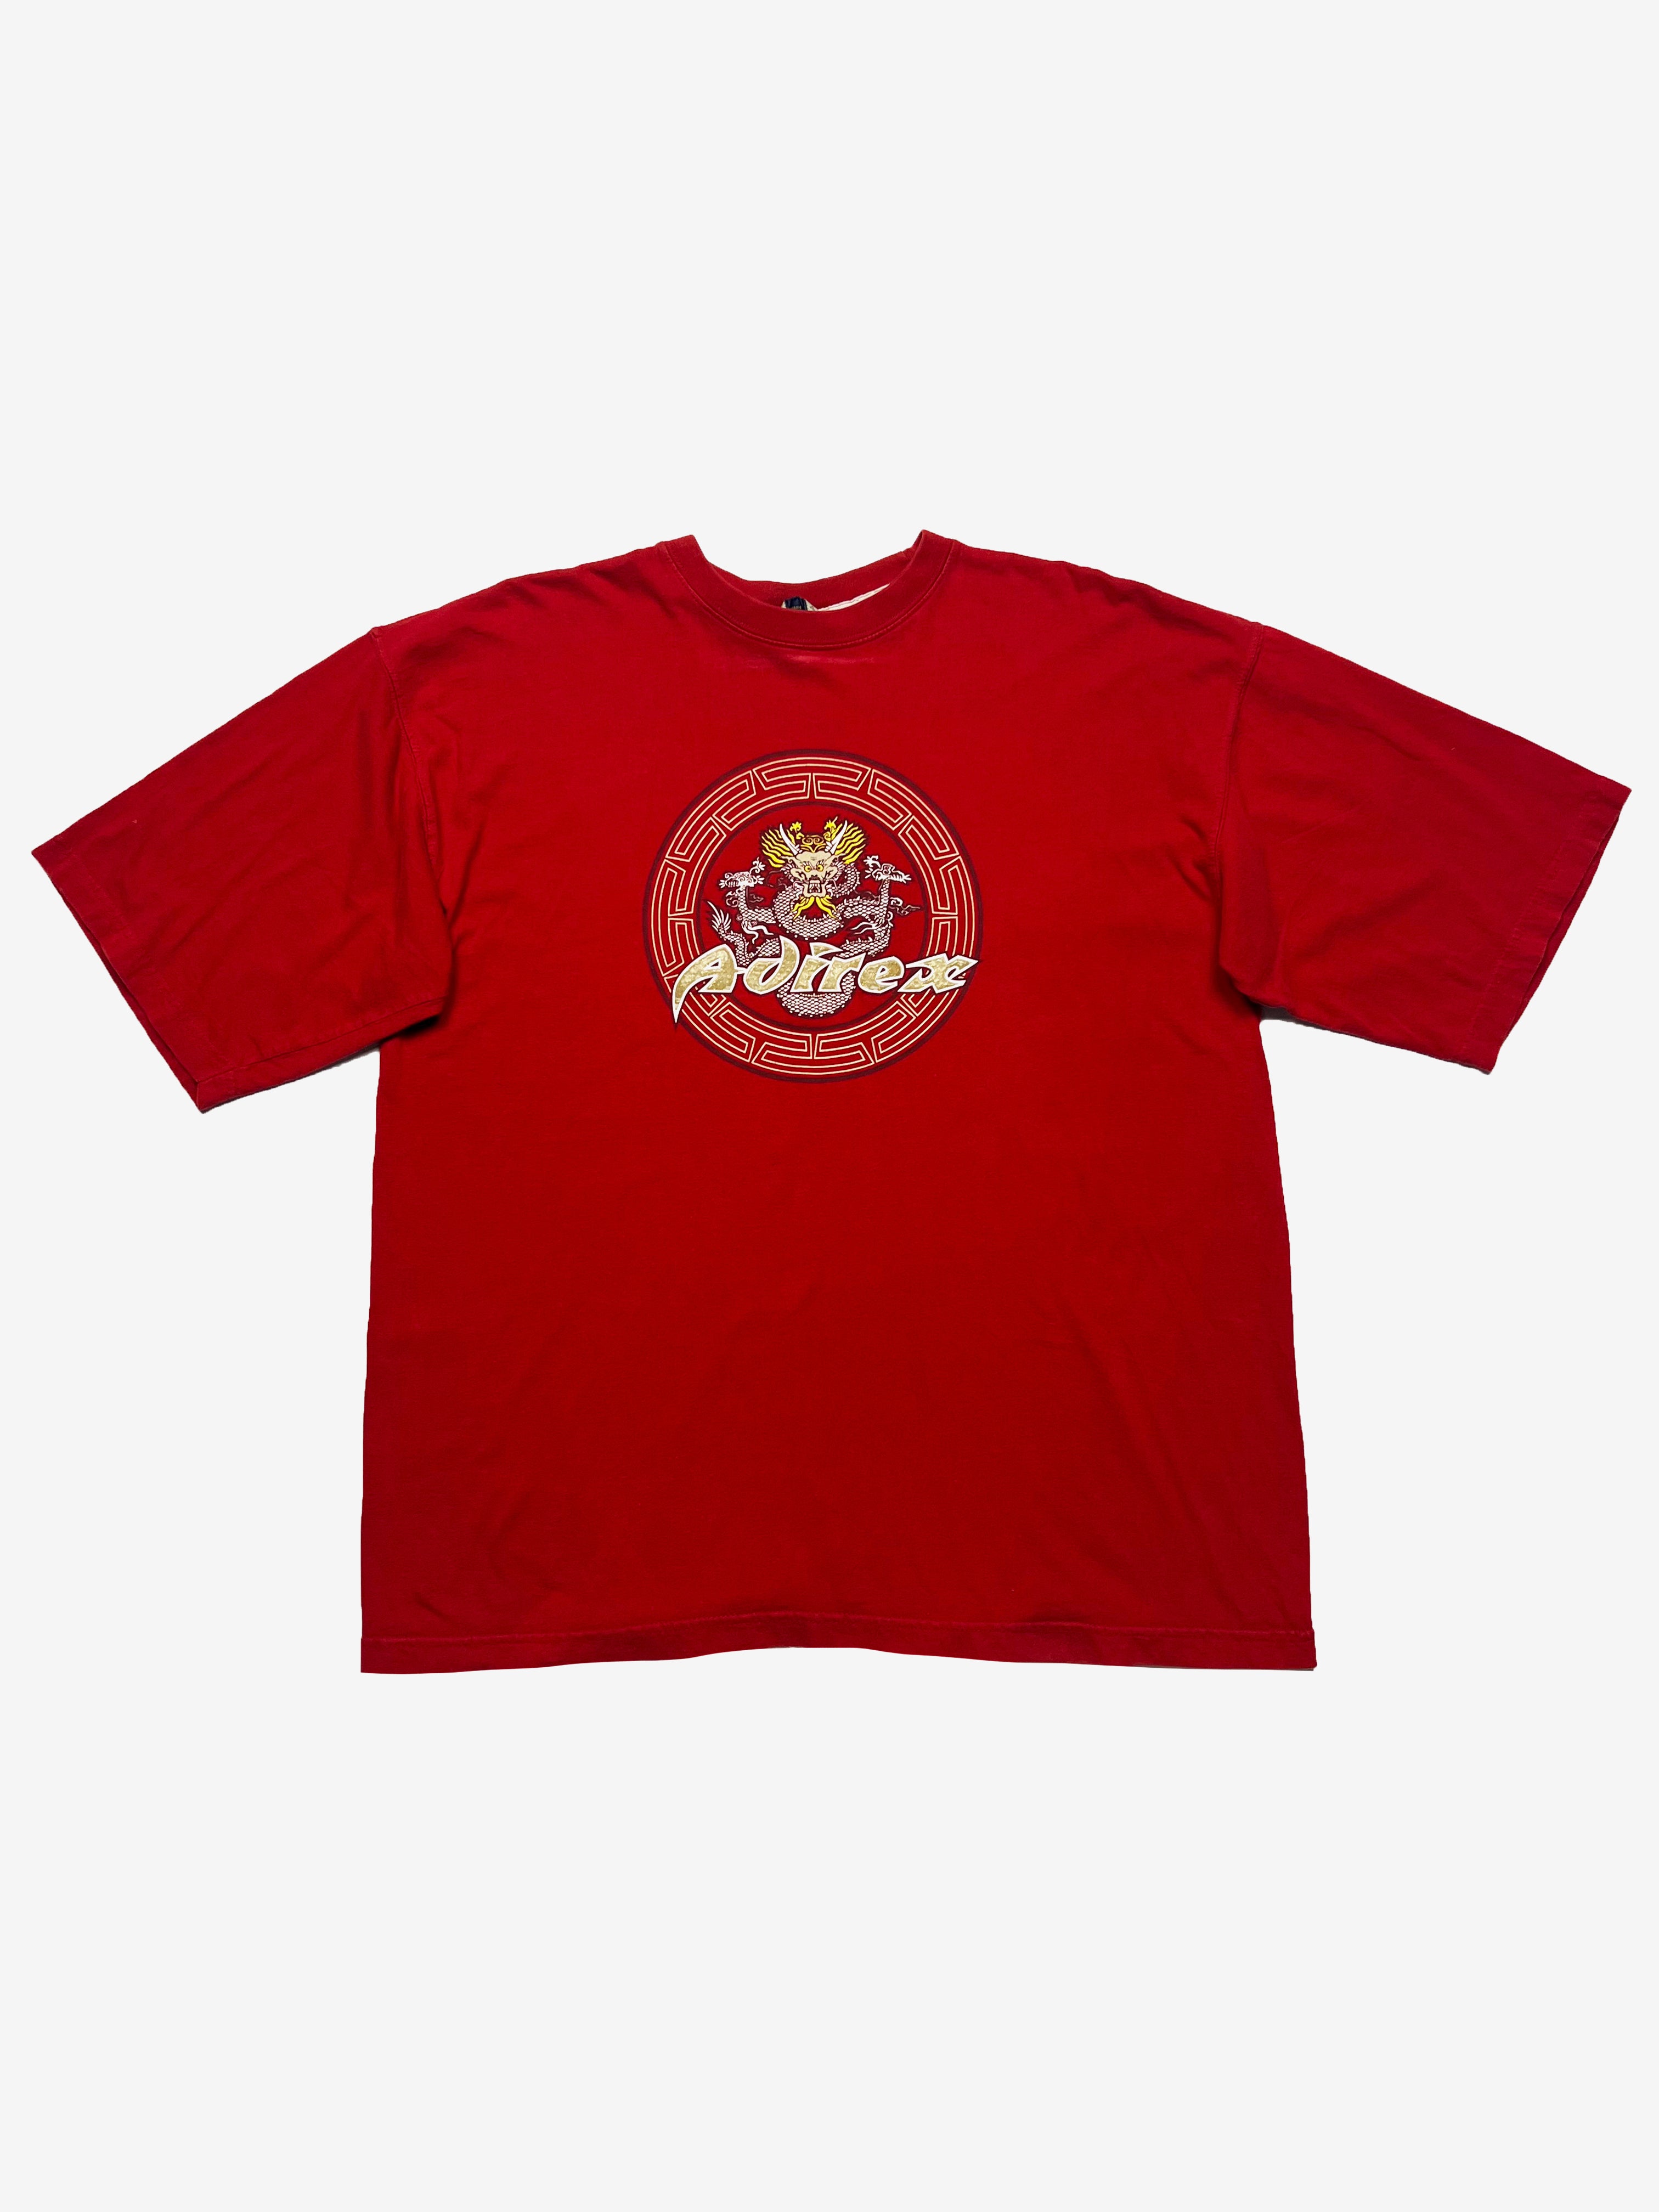 Avirex 'King Cobra' Red T-shirt 90's